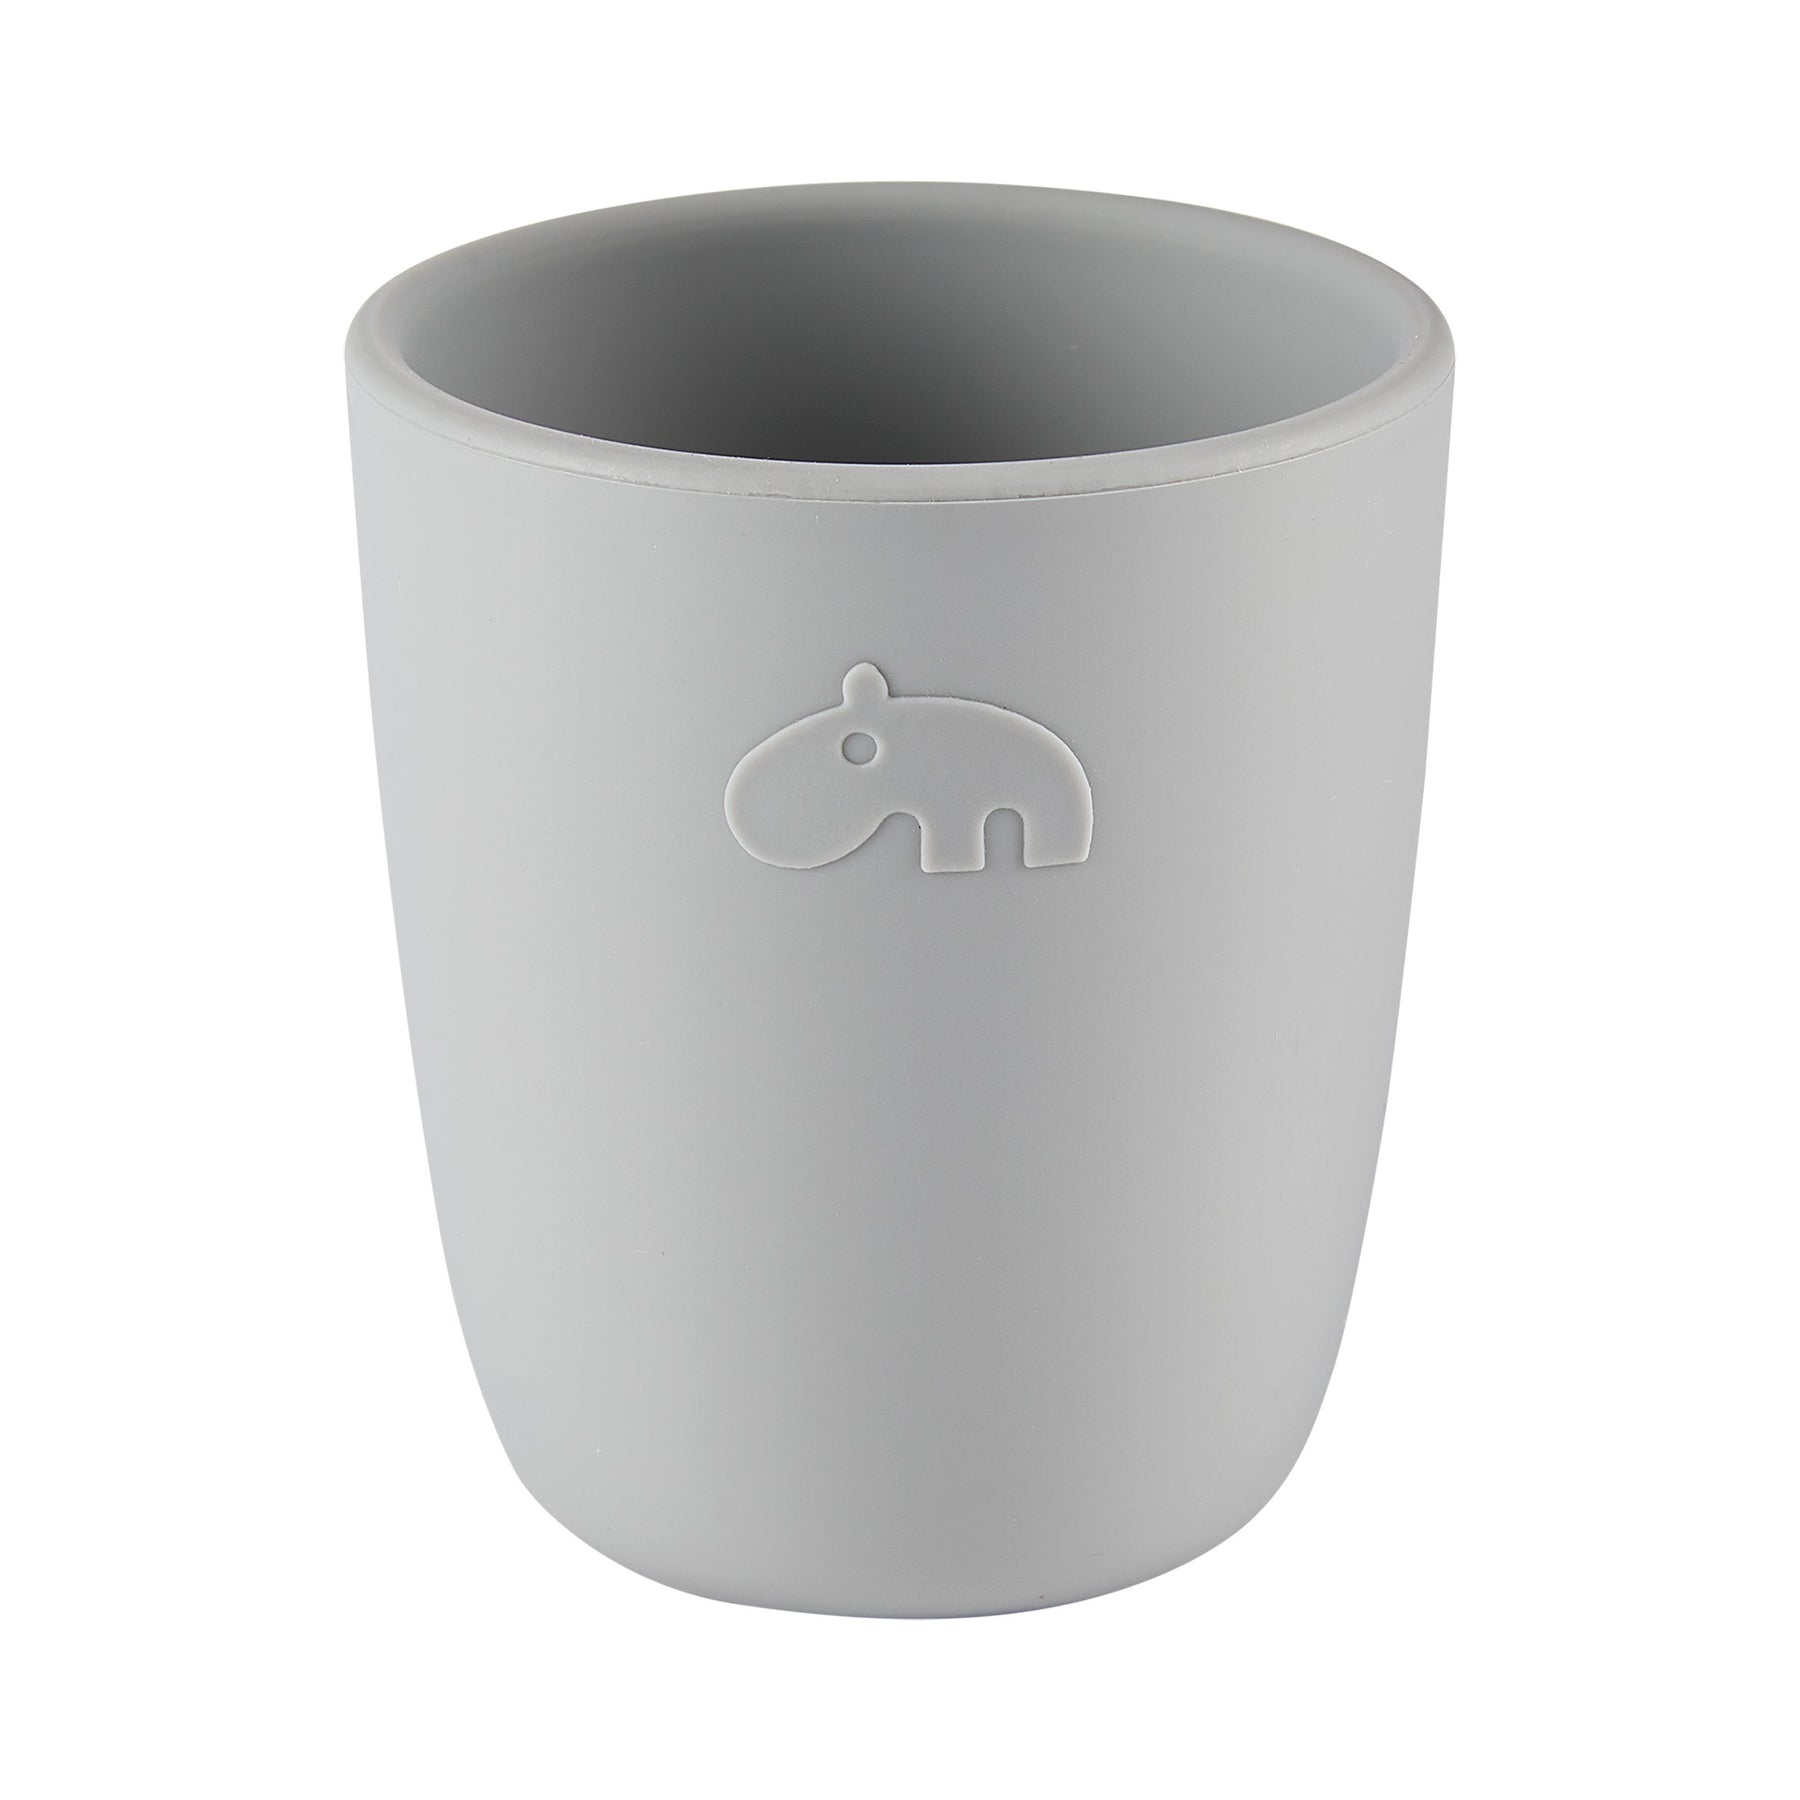 Silicone mini mug - Grey - Front